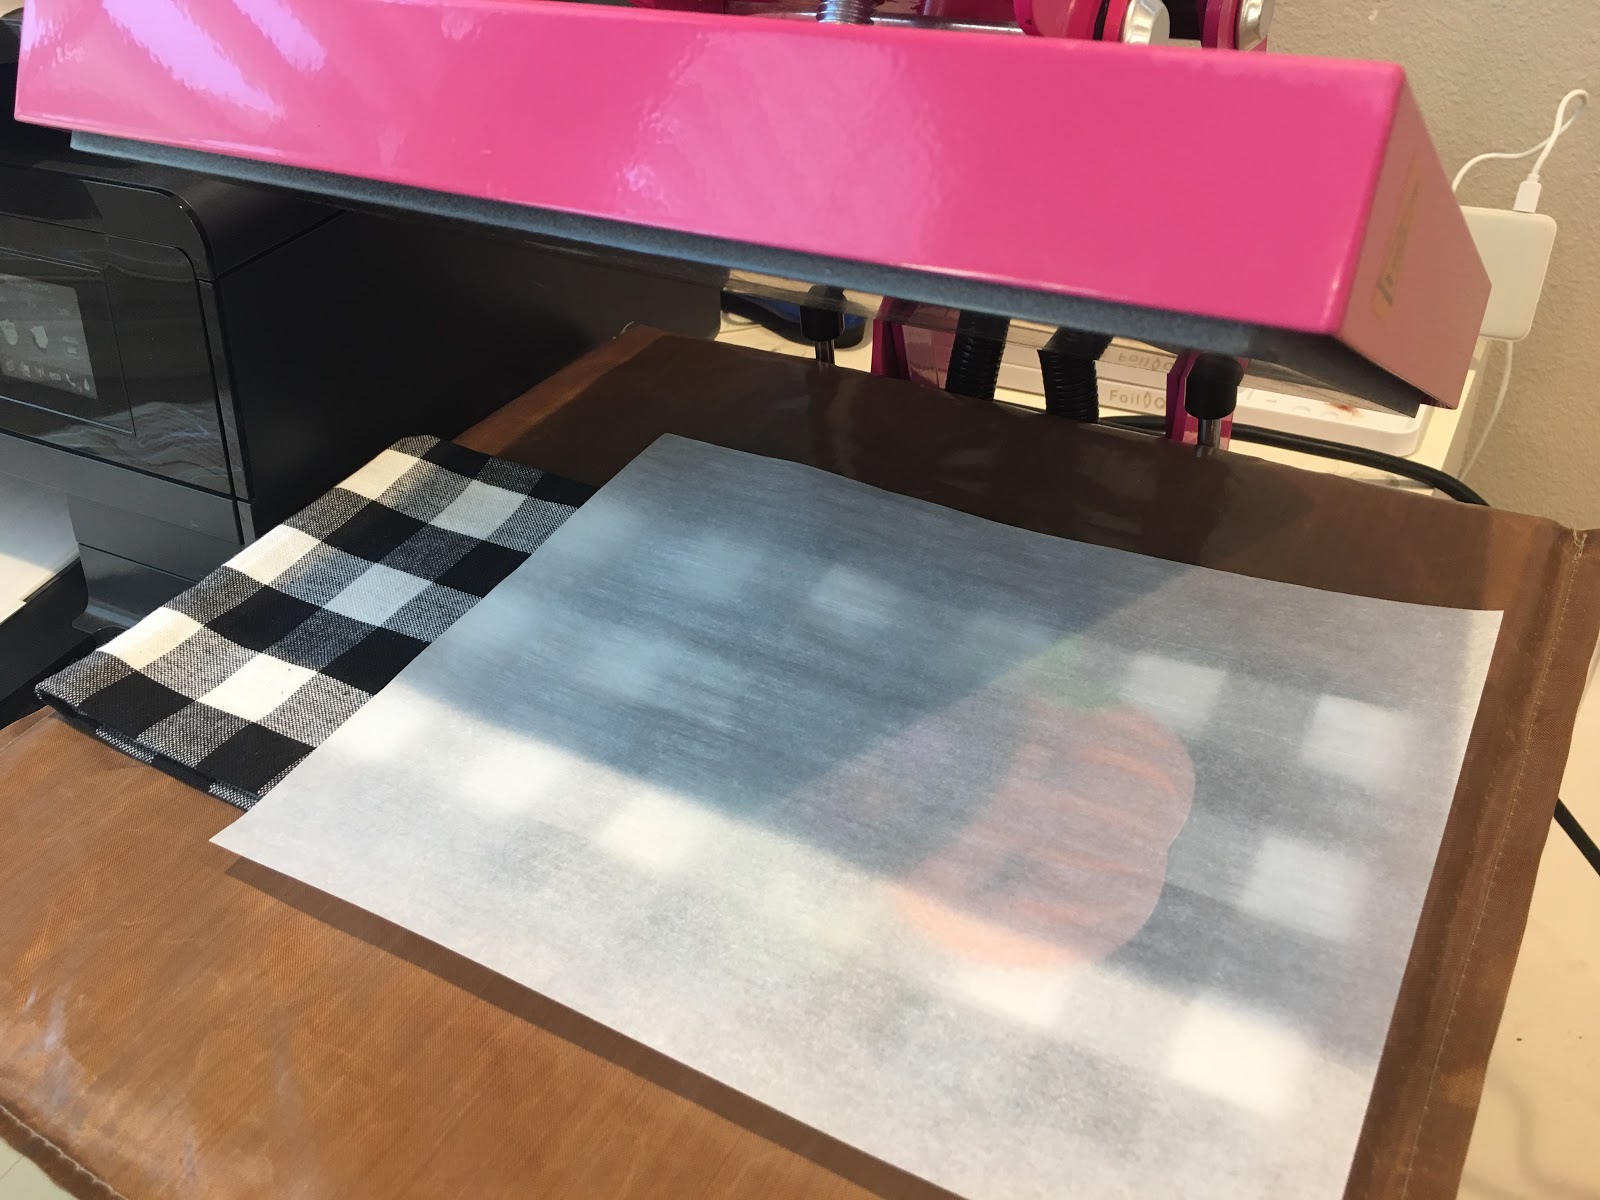 How to Use Printable Heat Transfer Vinyl on Wood - Silhouette School